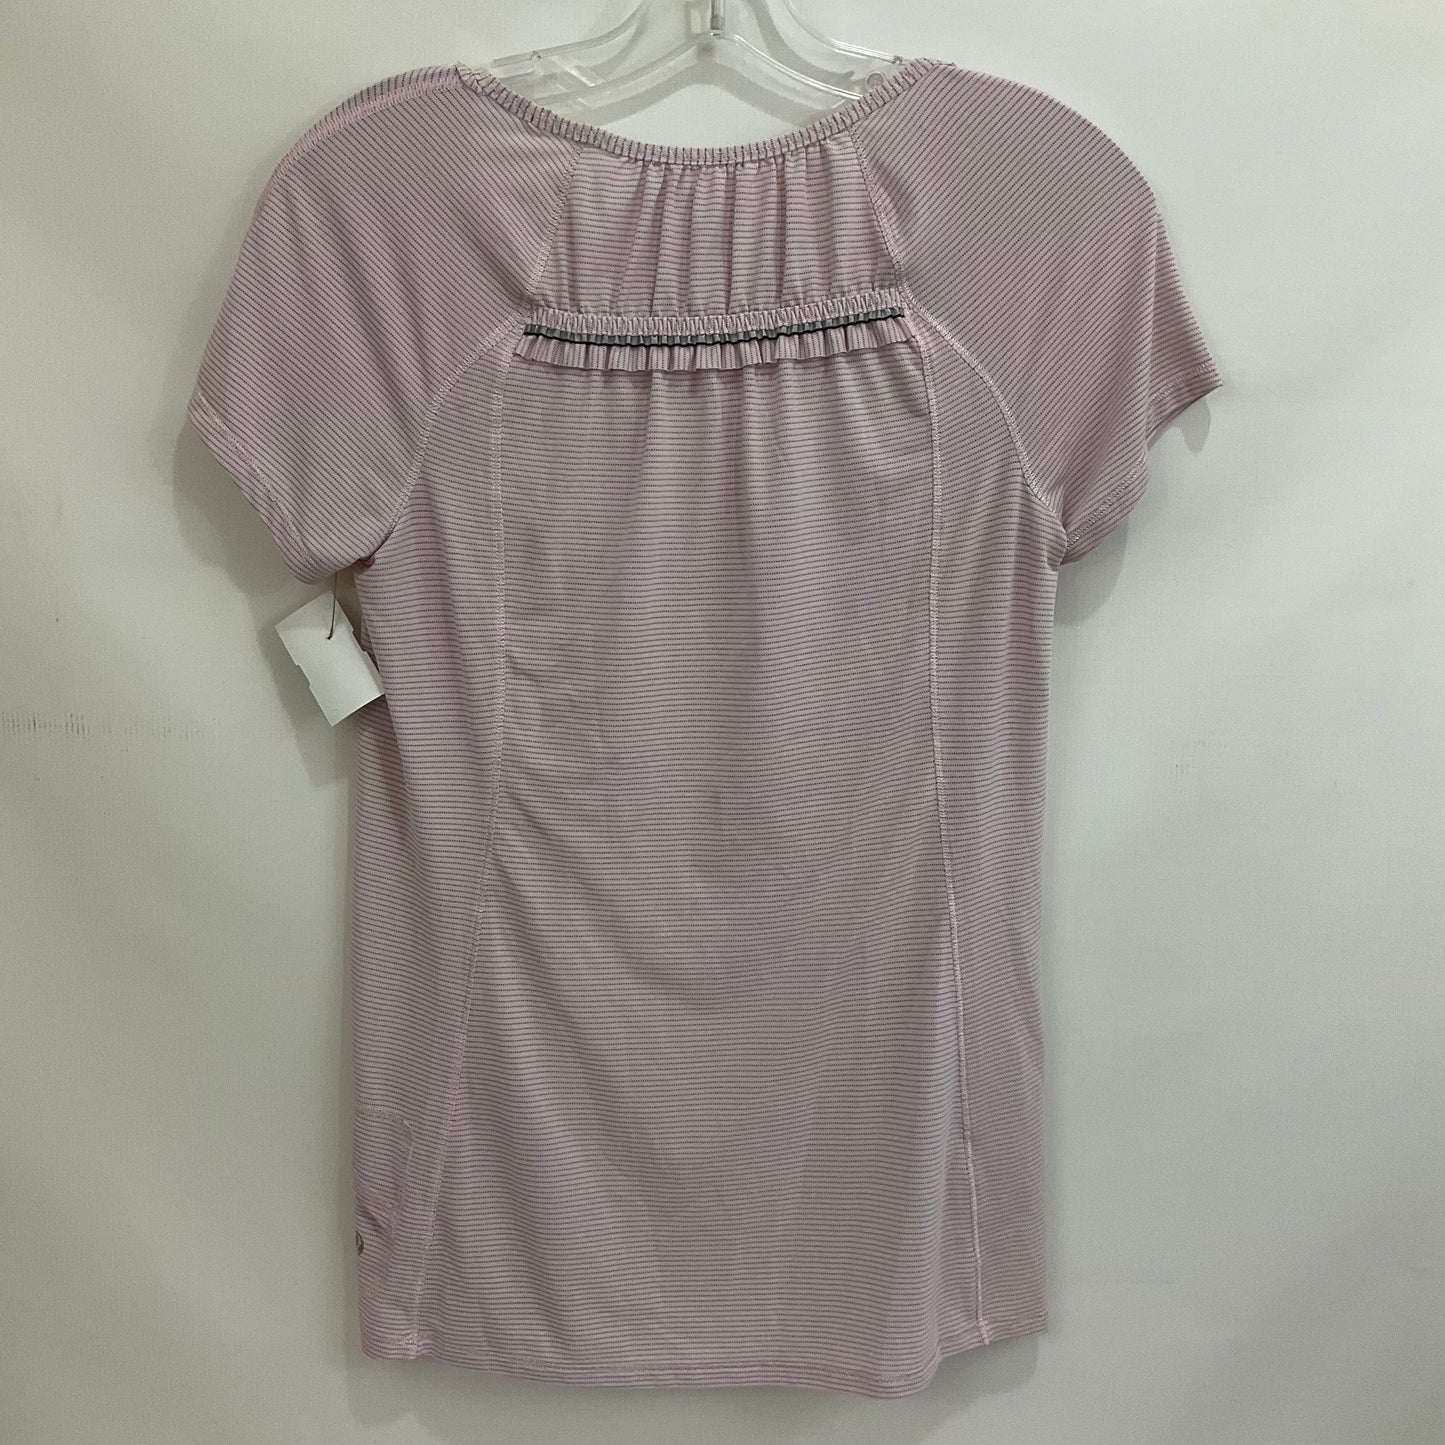 Pink Athletic Top Short Sleeve Lululemon, Size 6